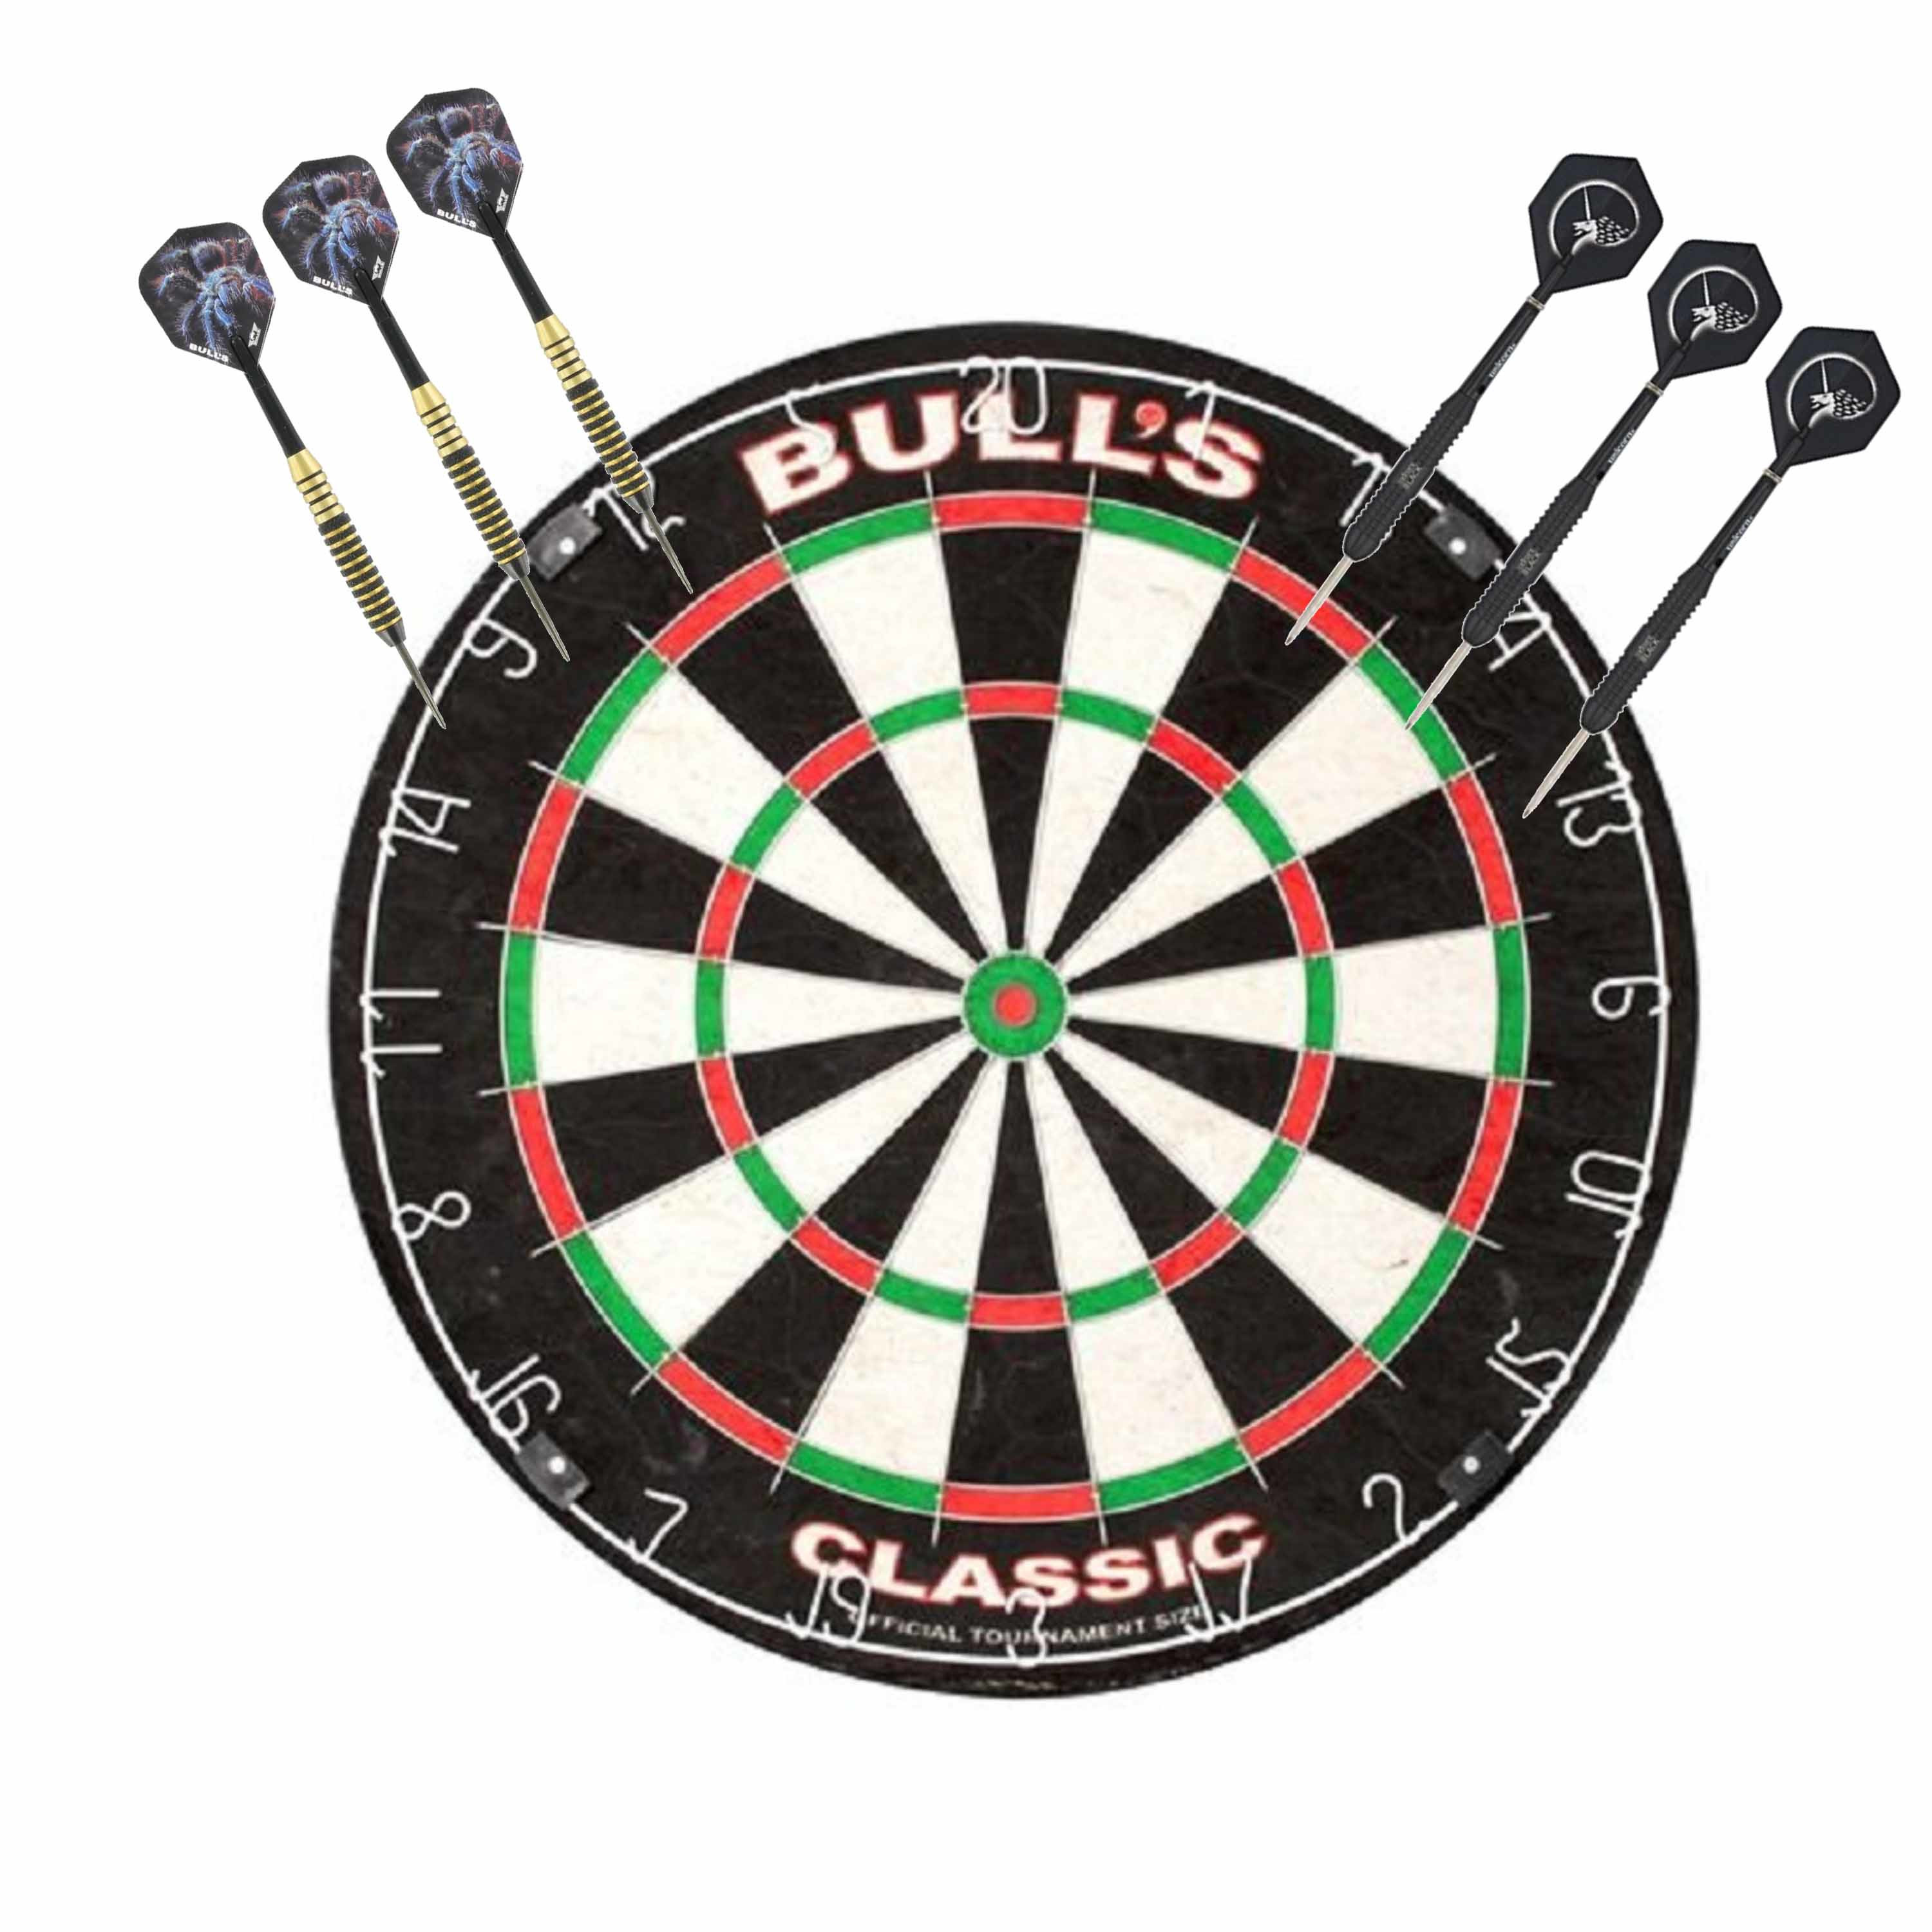 Dartbord Bulls The Classic met 2 sets dartpijlen 22 grams